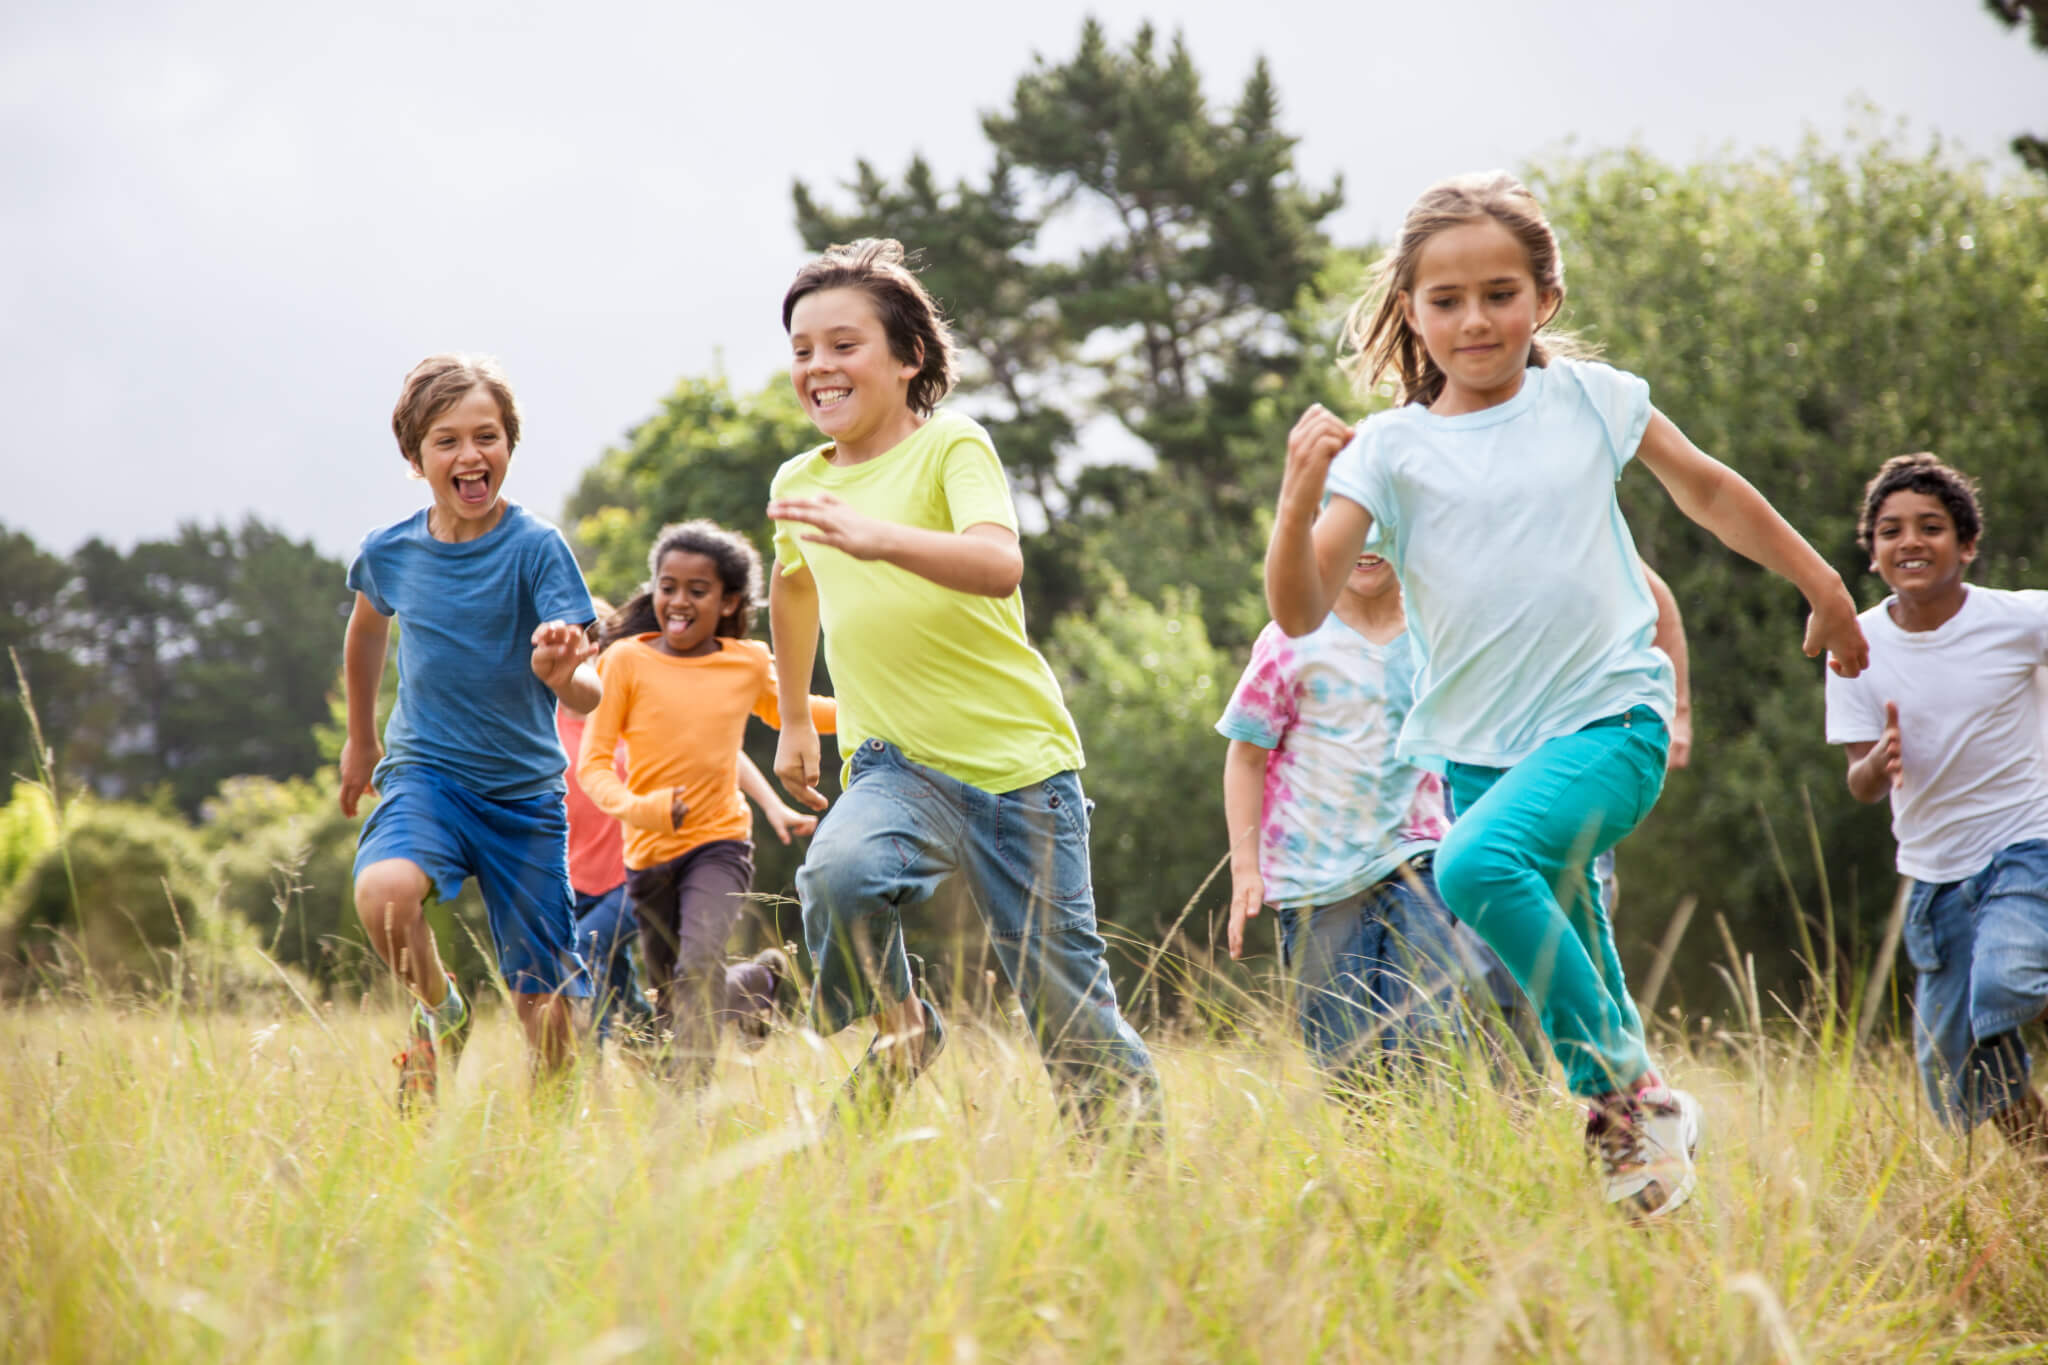 Children running together in a park - Shaklee "Naturally" Blog